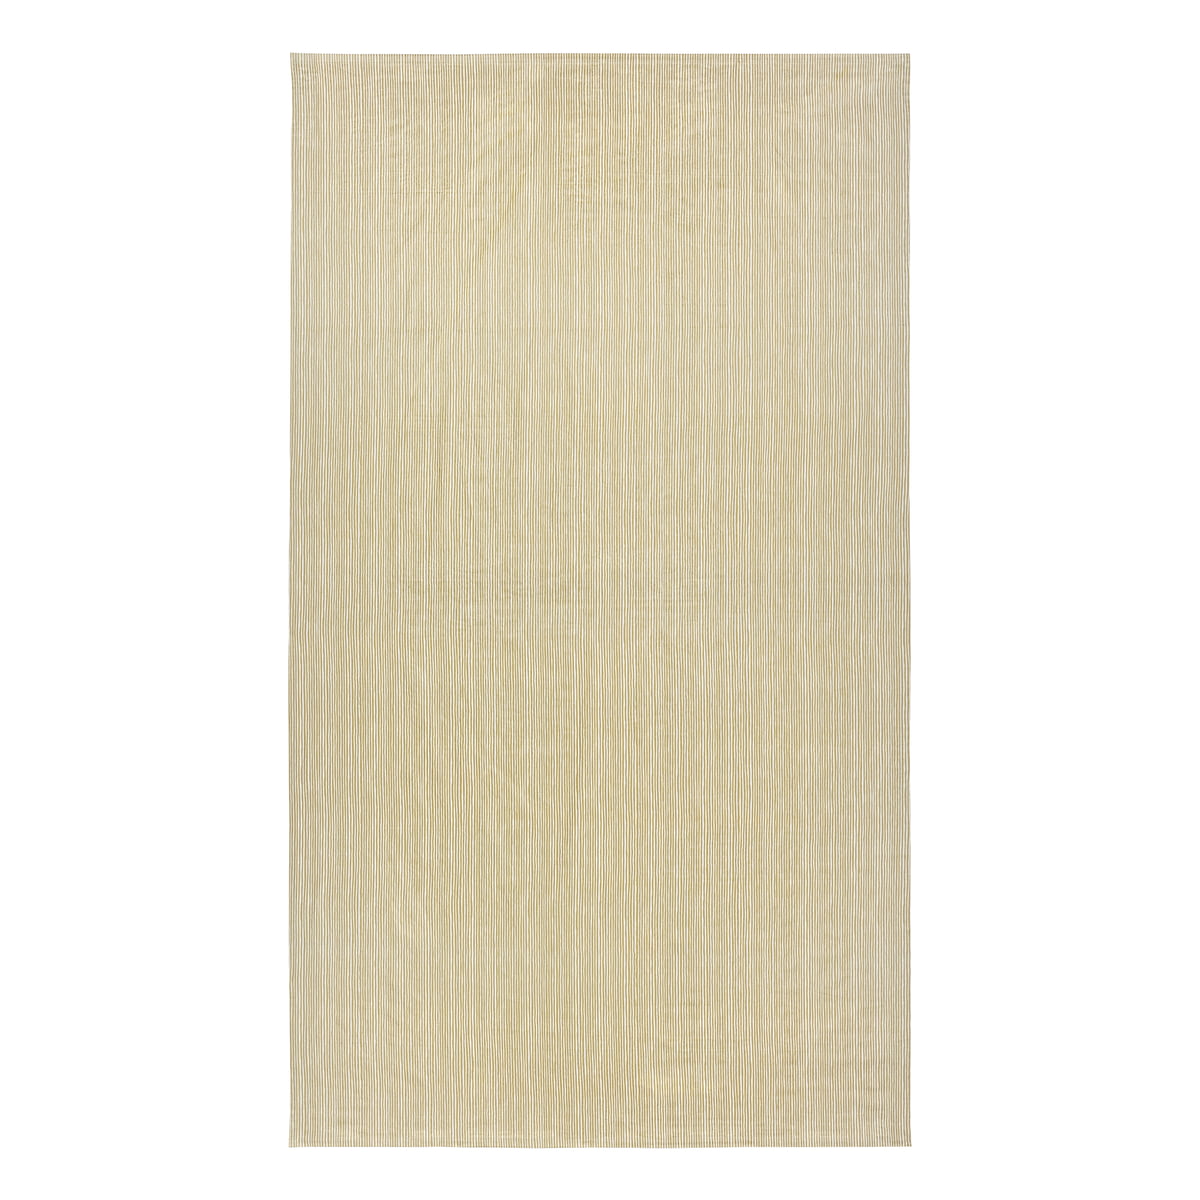 marimekko - varvunraita nappe, 135 x 250 cm, blanc naturel / or